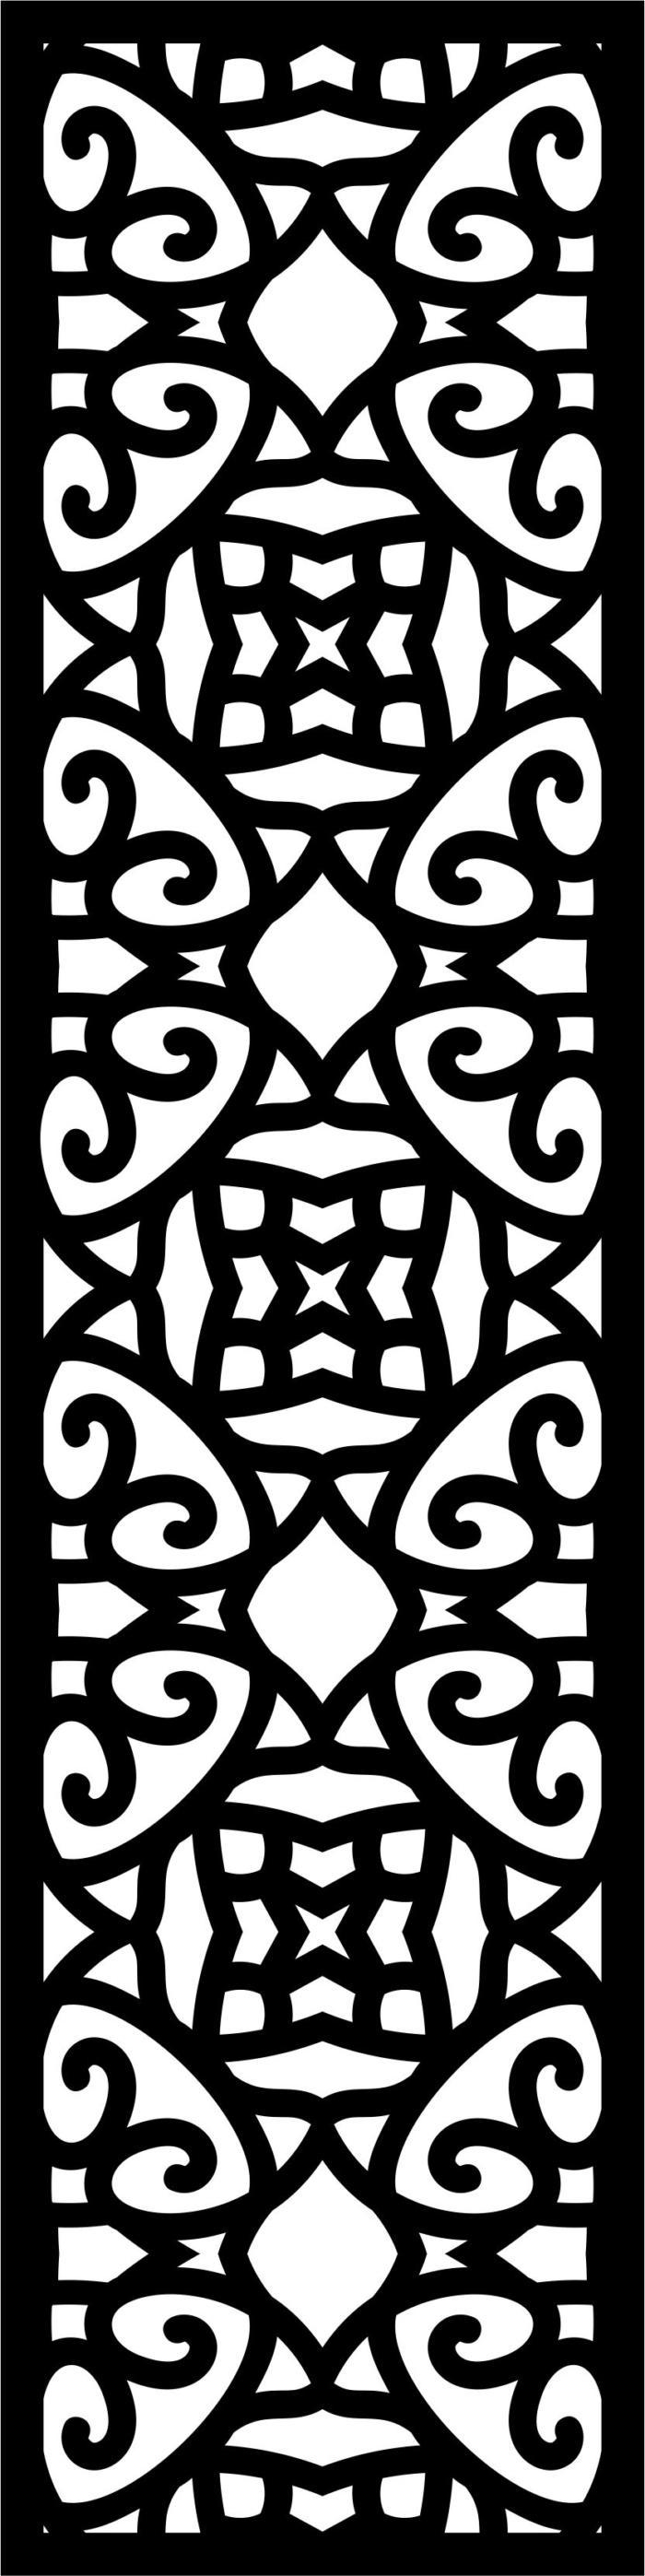 Panel Floral Lattice Stencil Room Divider Patterns Free DXF File